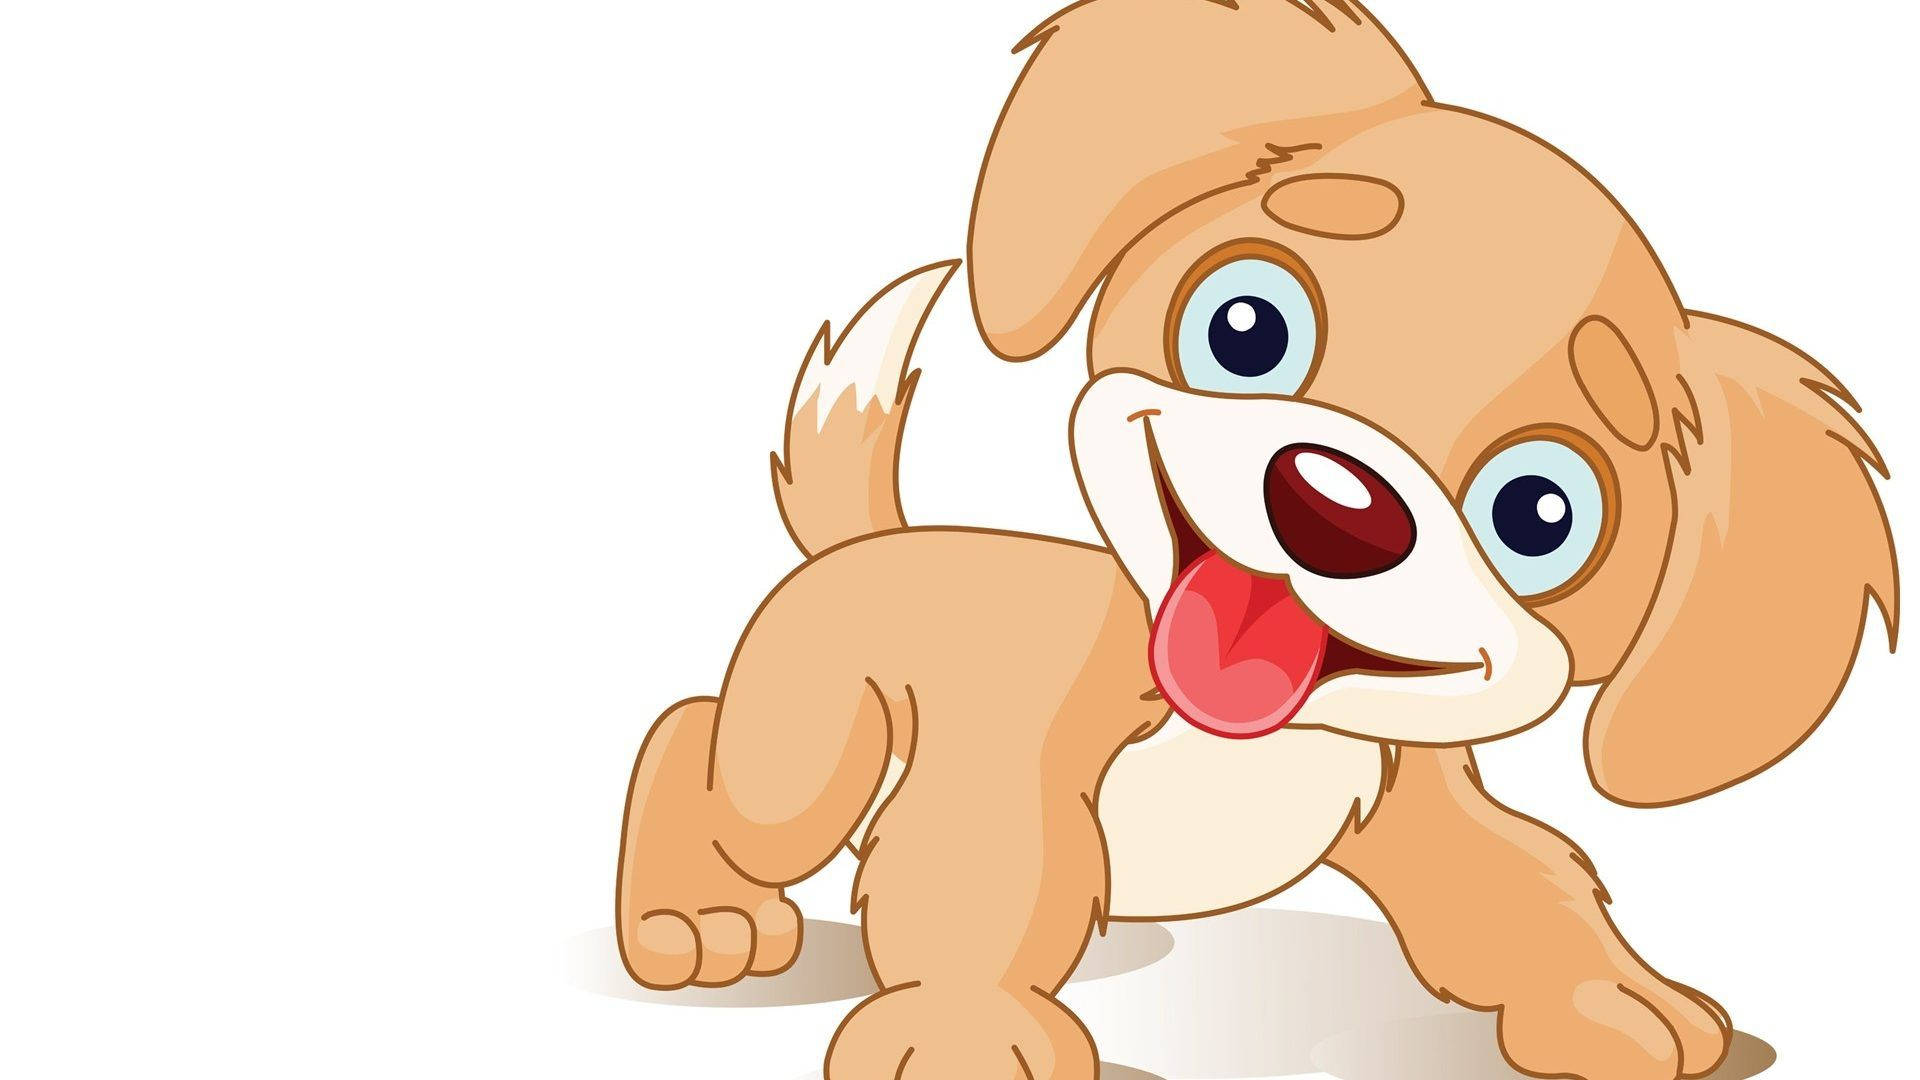 Free Cartoon Dog Wallpaper Downloads, [100+] Cartoon Dog Wallpapers for  FREE 